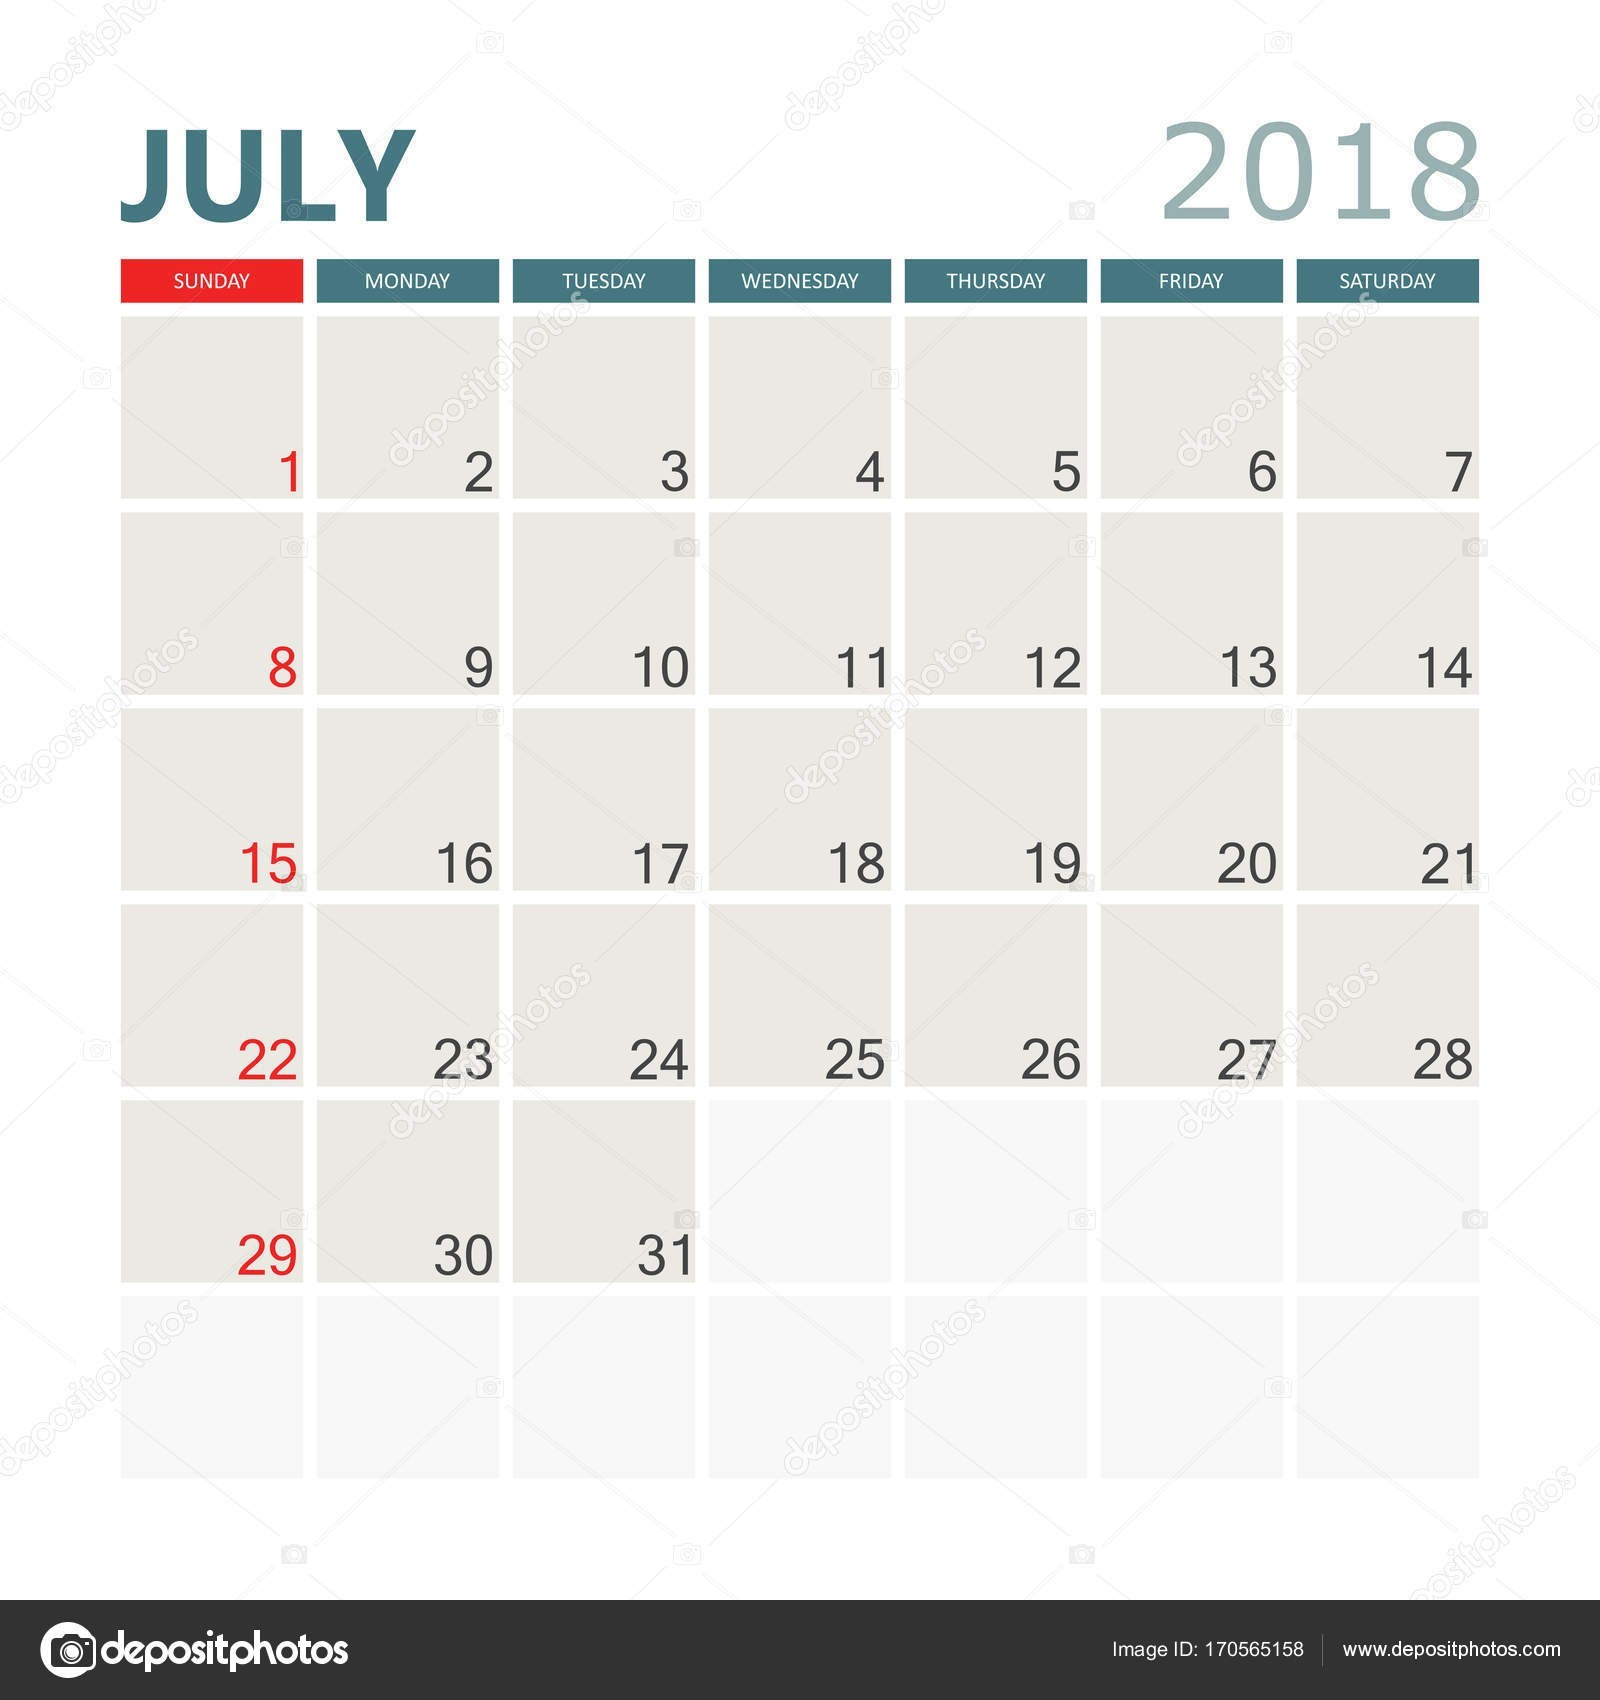 Depo Provera Calendar July 2019 | Calendar Template